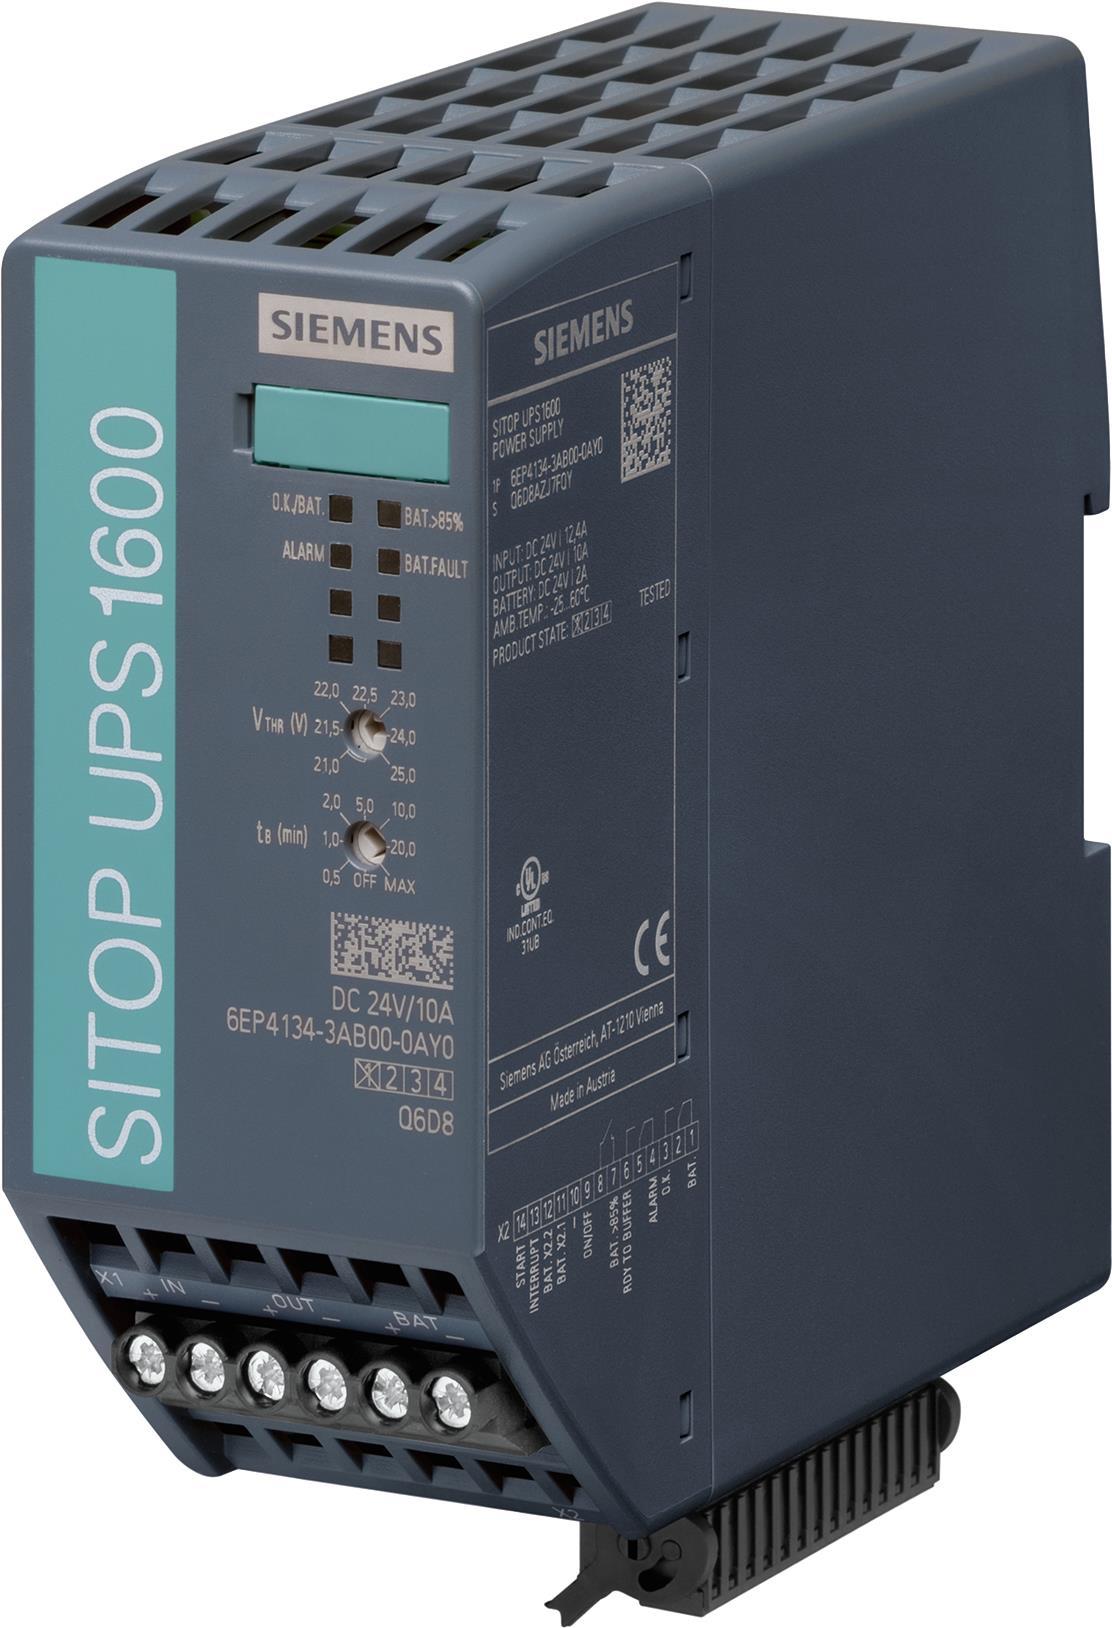 Siemens 6EP4134-3AB00-0AY0 Unterbrechungsfreie Stromversorgung (USV) (6EP4134-3AB00-0AY0)